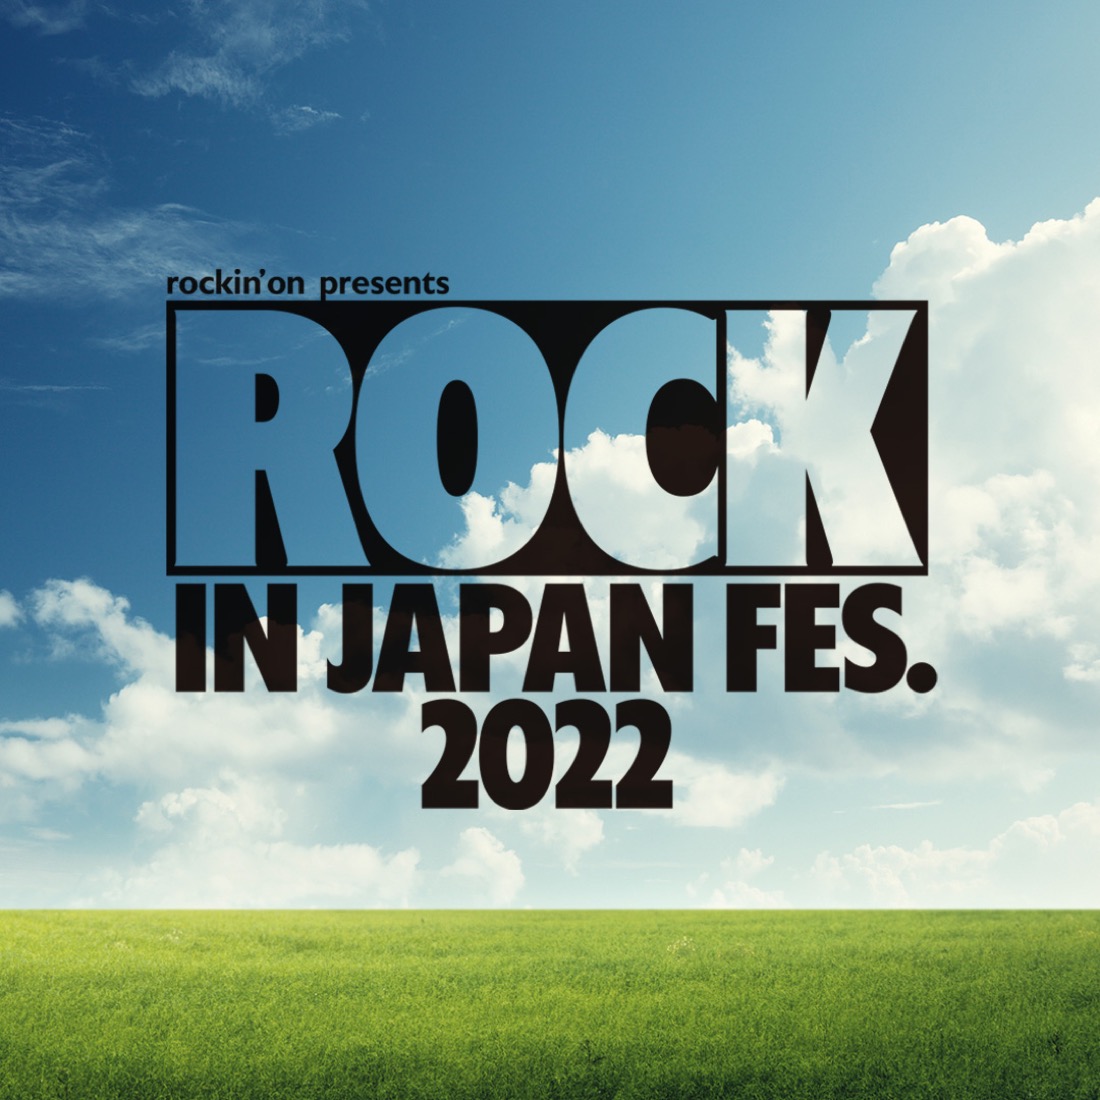 『ROCK IN JAPAN FES. 2022』SUPER BEAVER、ONE OK ROCKら15組の出演があらたに決定 - 画像一覧（3/3）